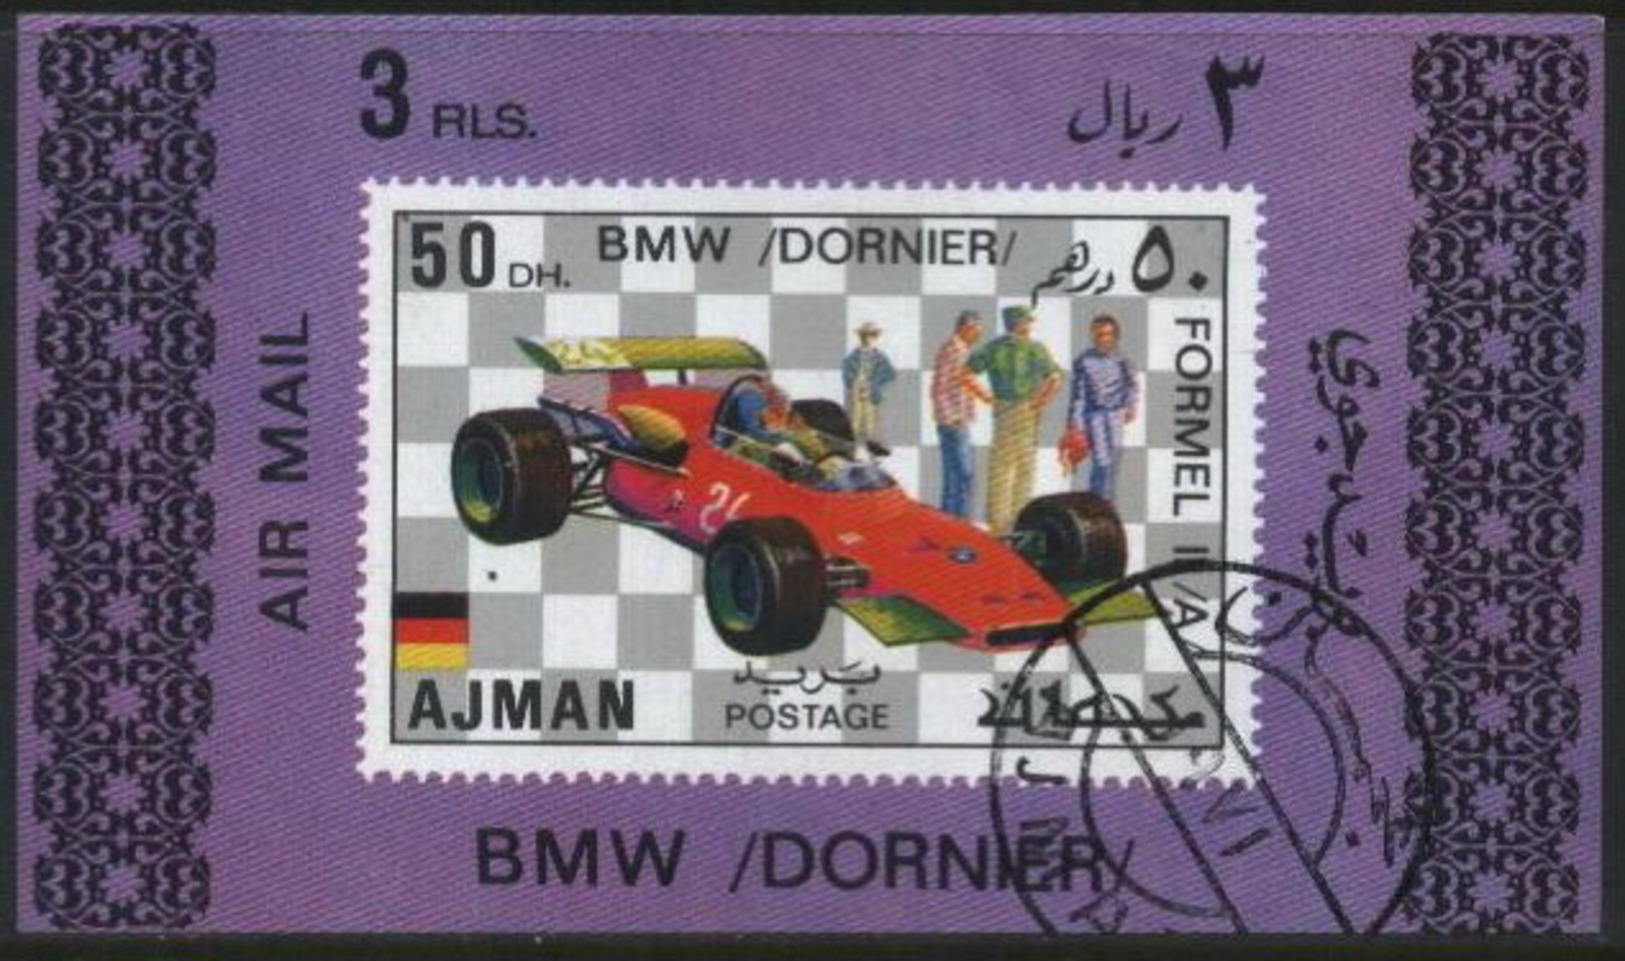 Ajman (United Arab Emirates) BMW Dornier Racing Classic Car Used Cancelled Block M/S (U-102) - Cars